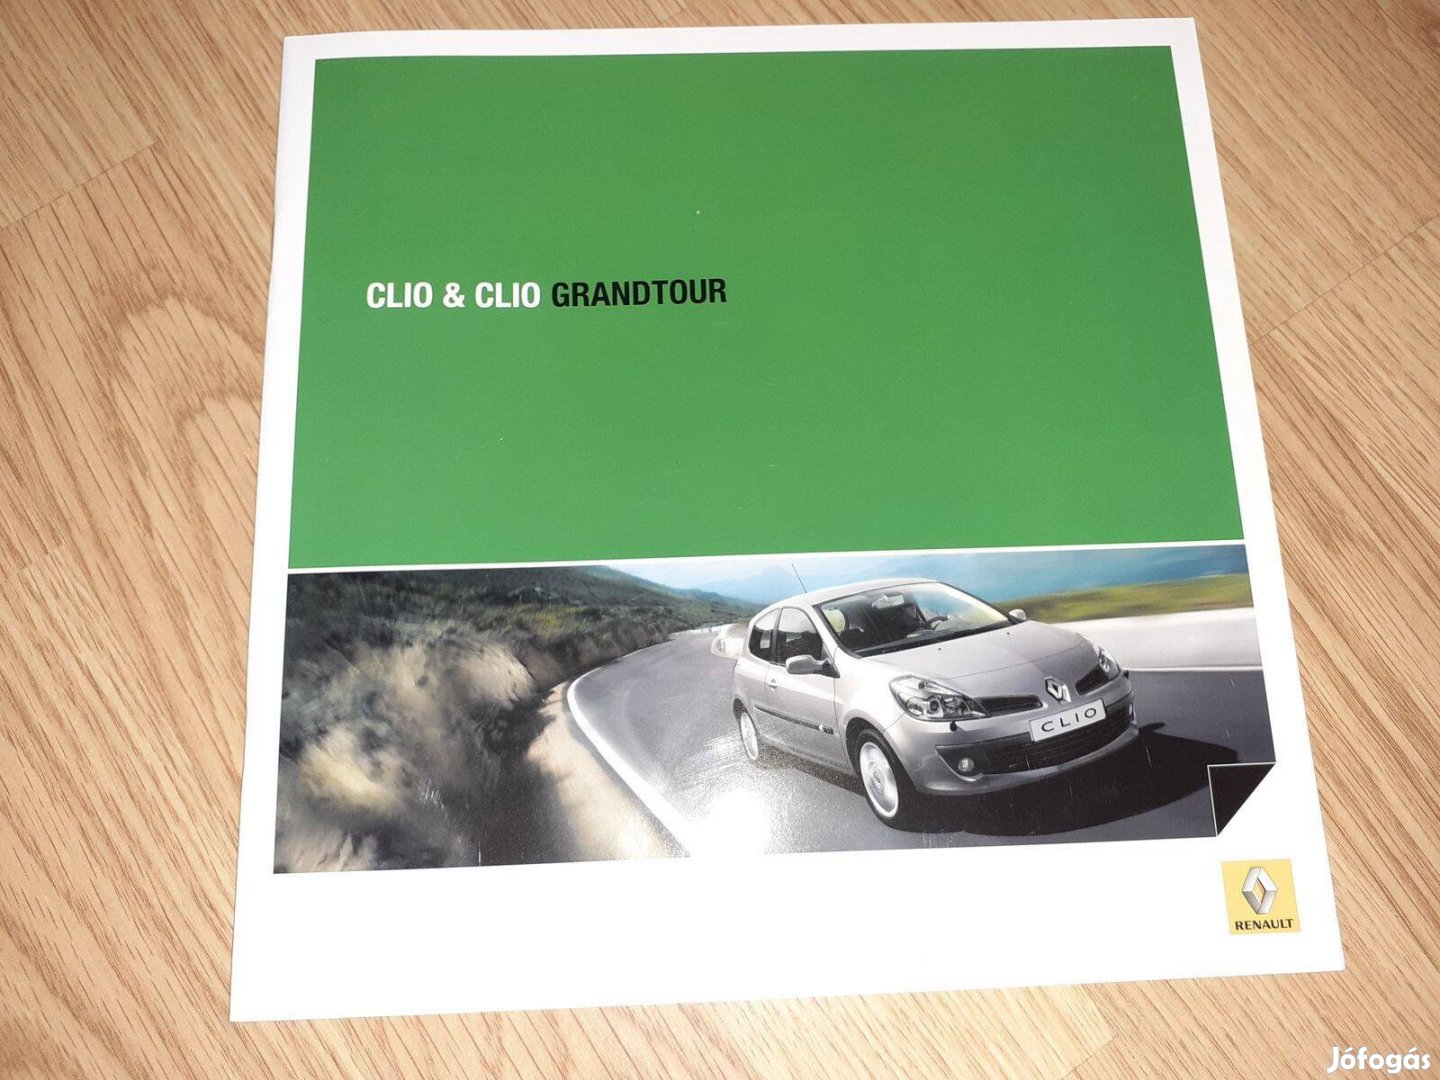 Renault Clio & Grandtour prospektus - 2008, magyar nyelvű